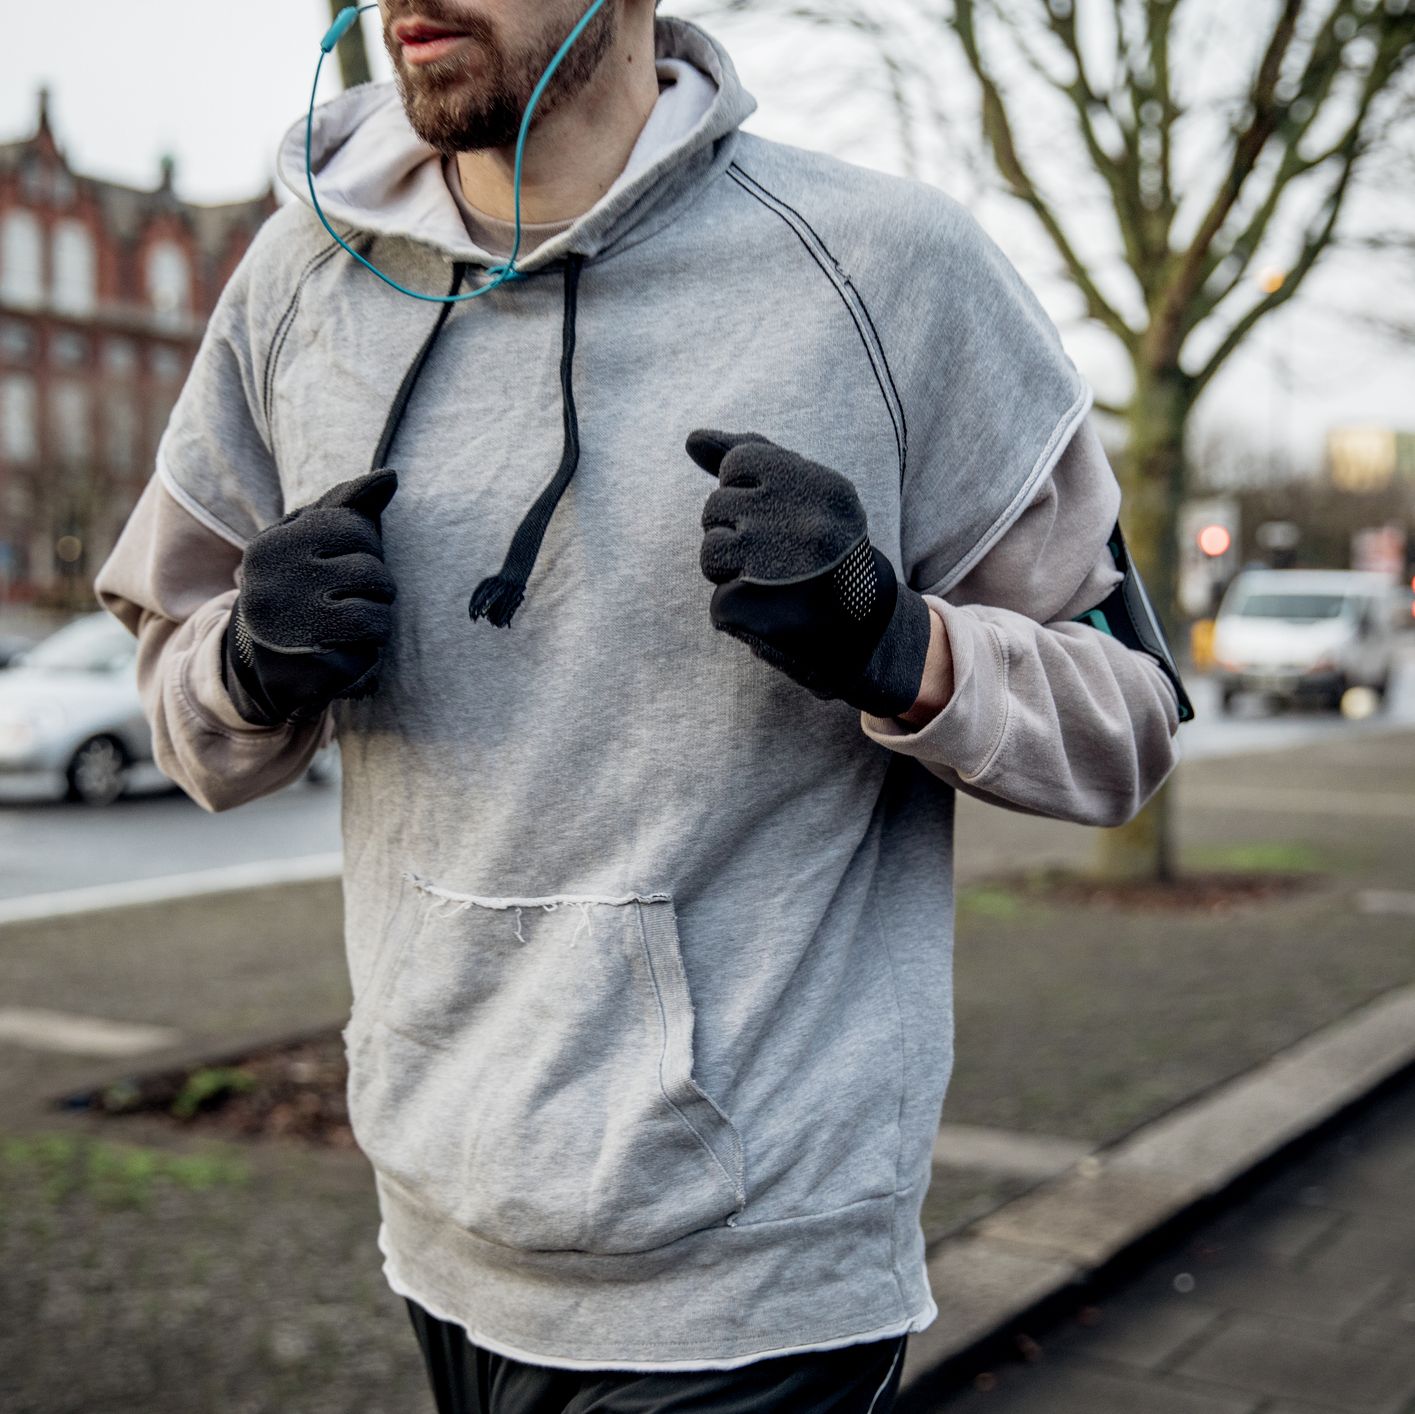 Mejores guantes de running: para correr de hombre mujer